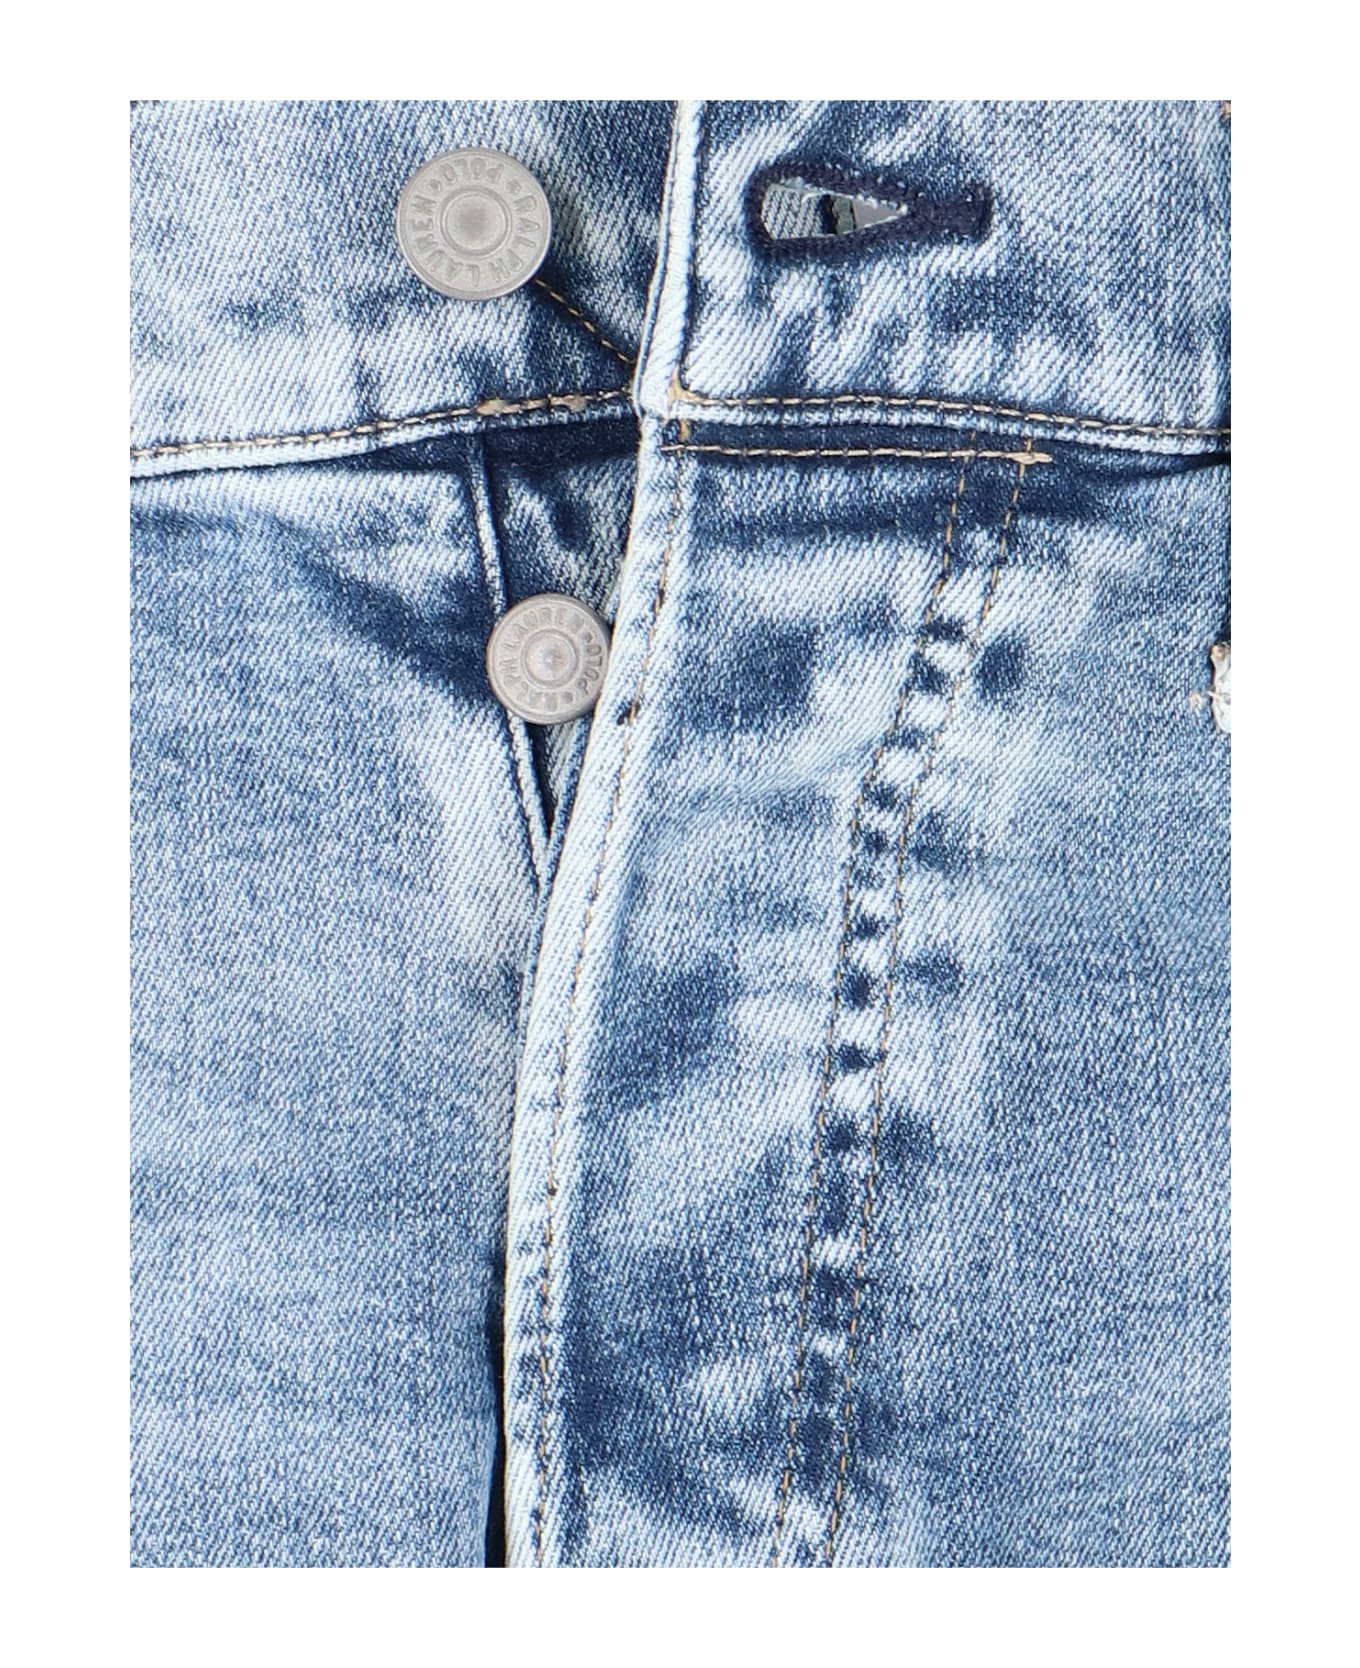 Polo Ralph Lauren Slim Fit Jeans - Light Blue デニム